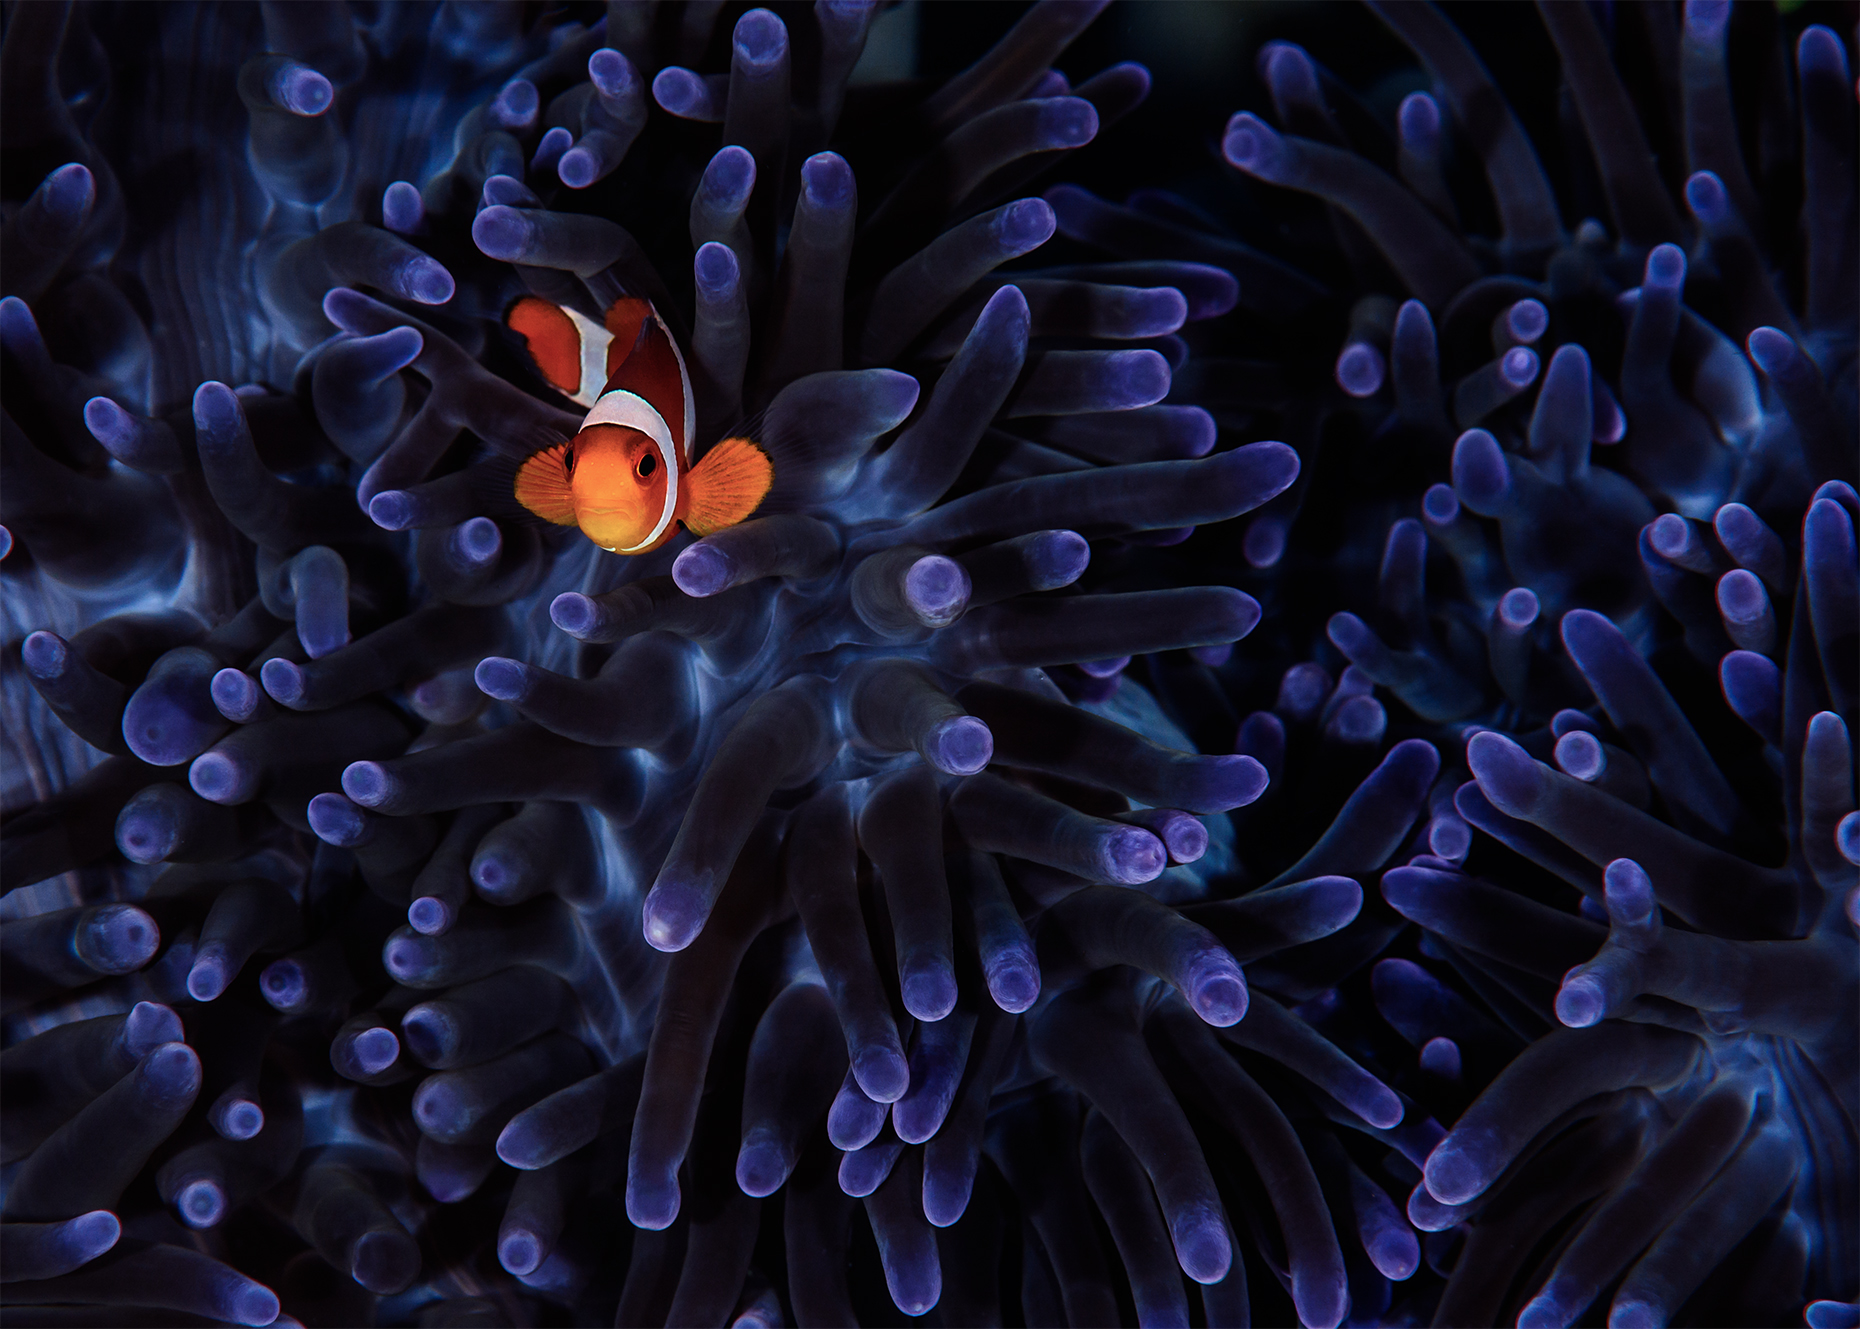 Juvenile Ocellaris clownfish